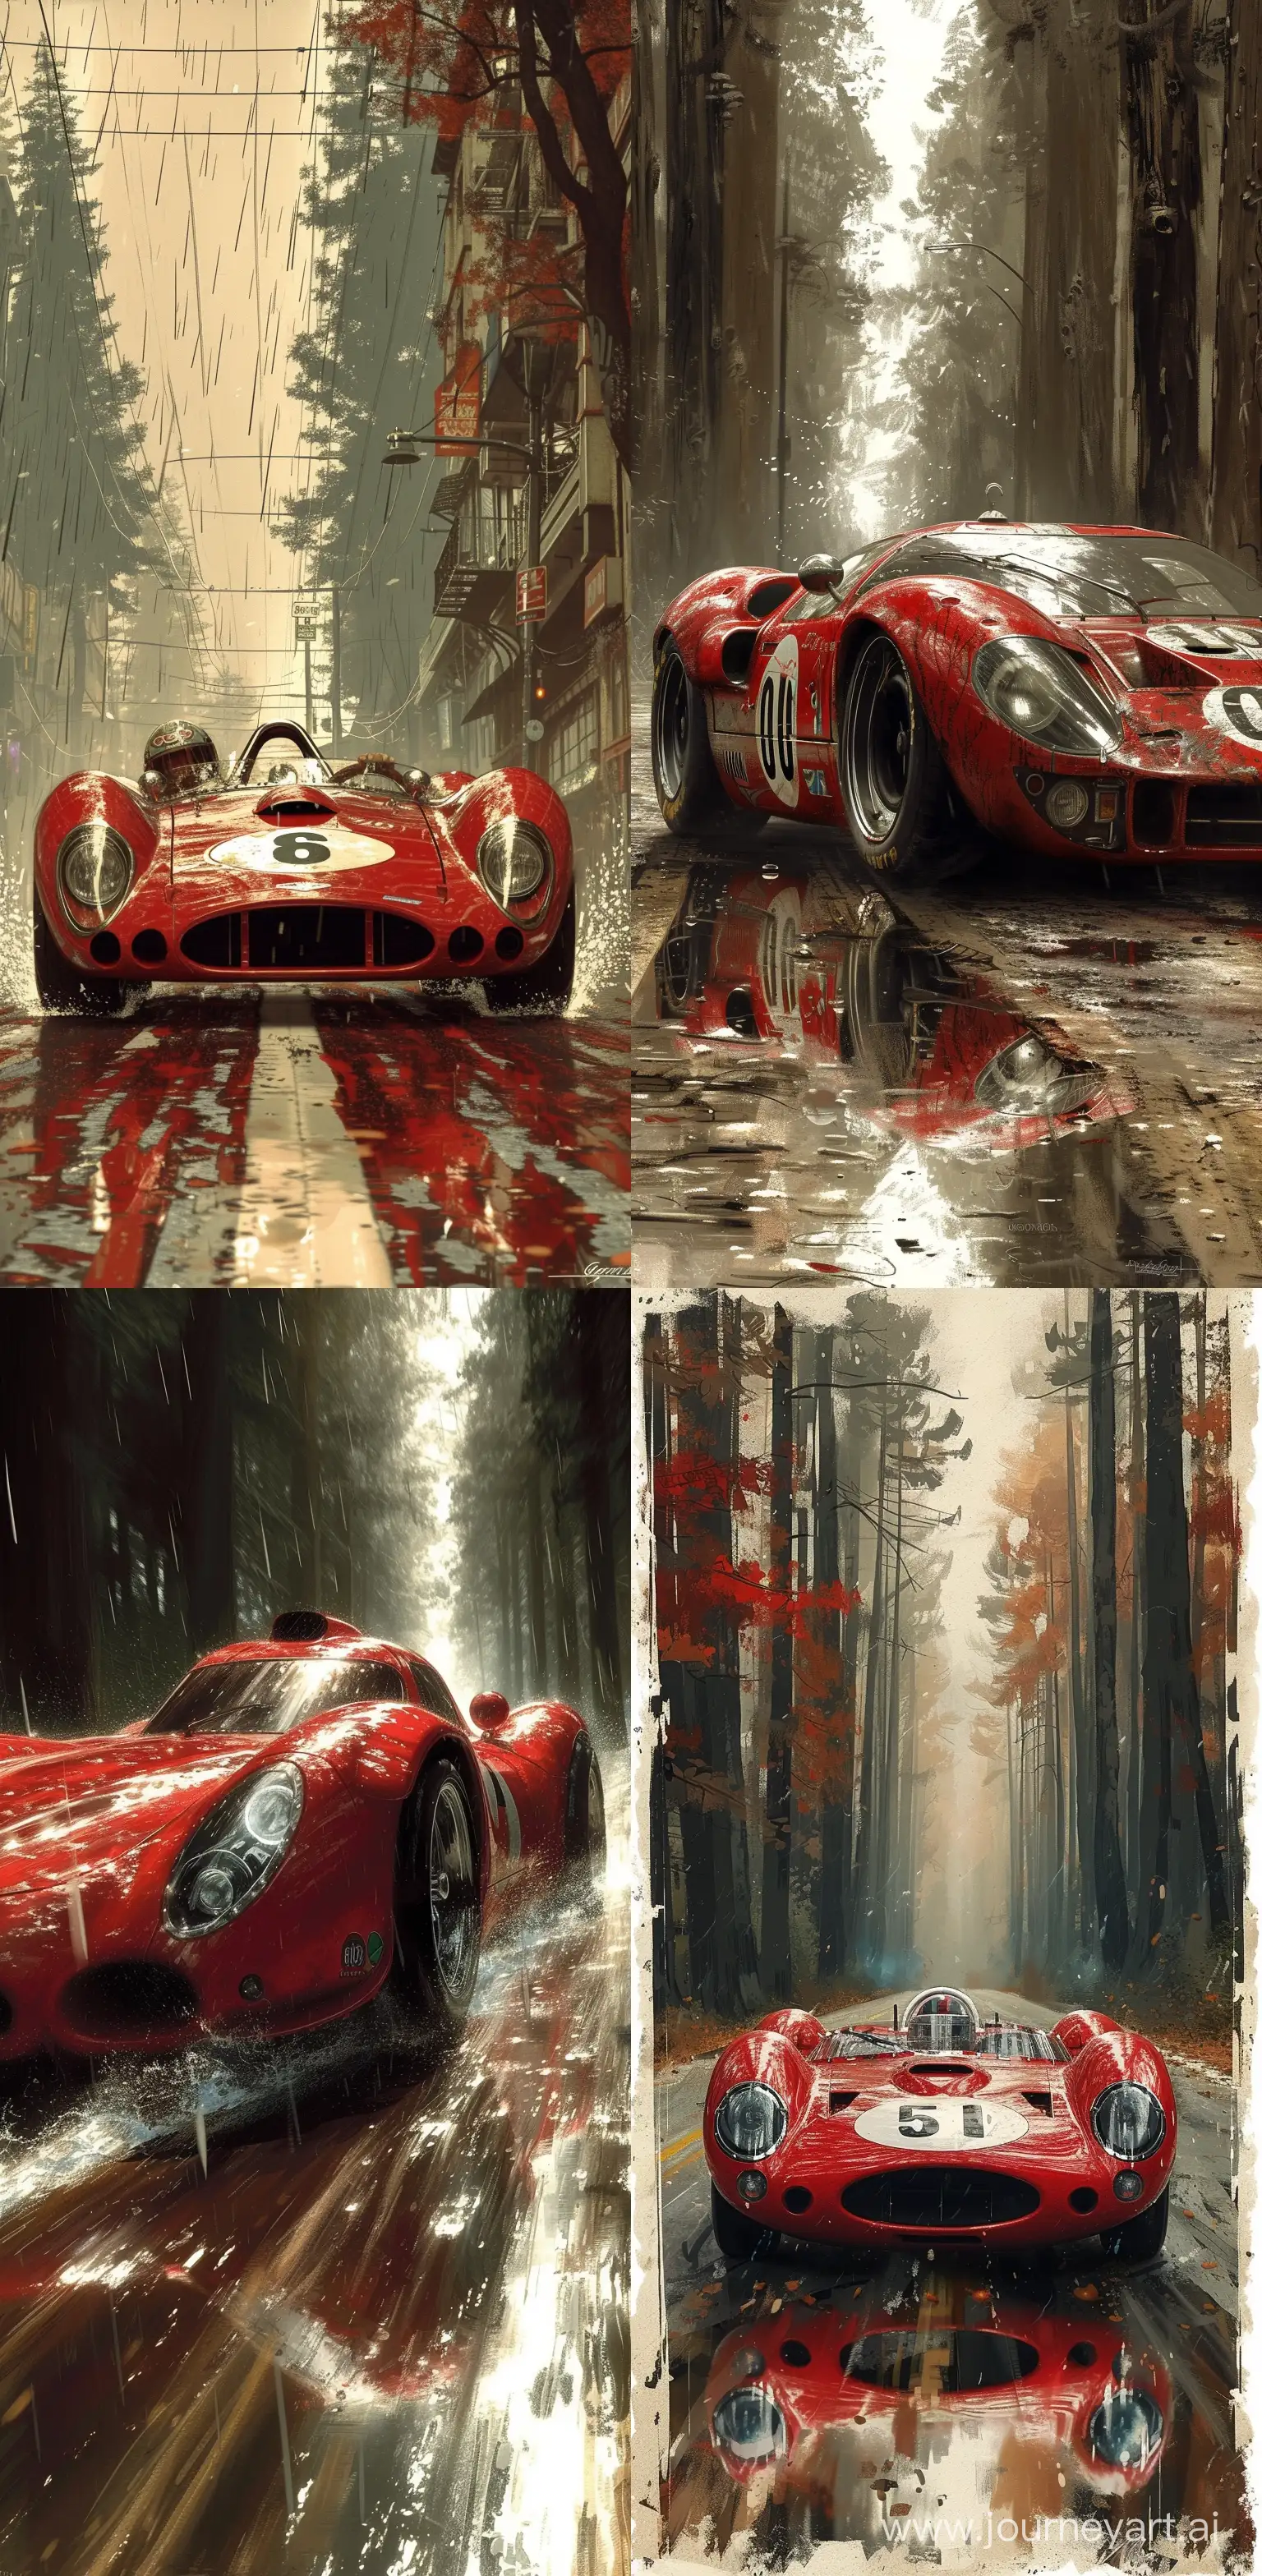  red race car, in the style of sam spratt, historical illustrations, old masters, genndy tartakovsky, soggy, masaccio, monochromatic realism --ar 63:128 --stylize 750 --v 6 